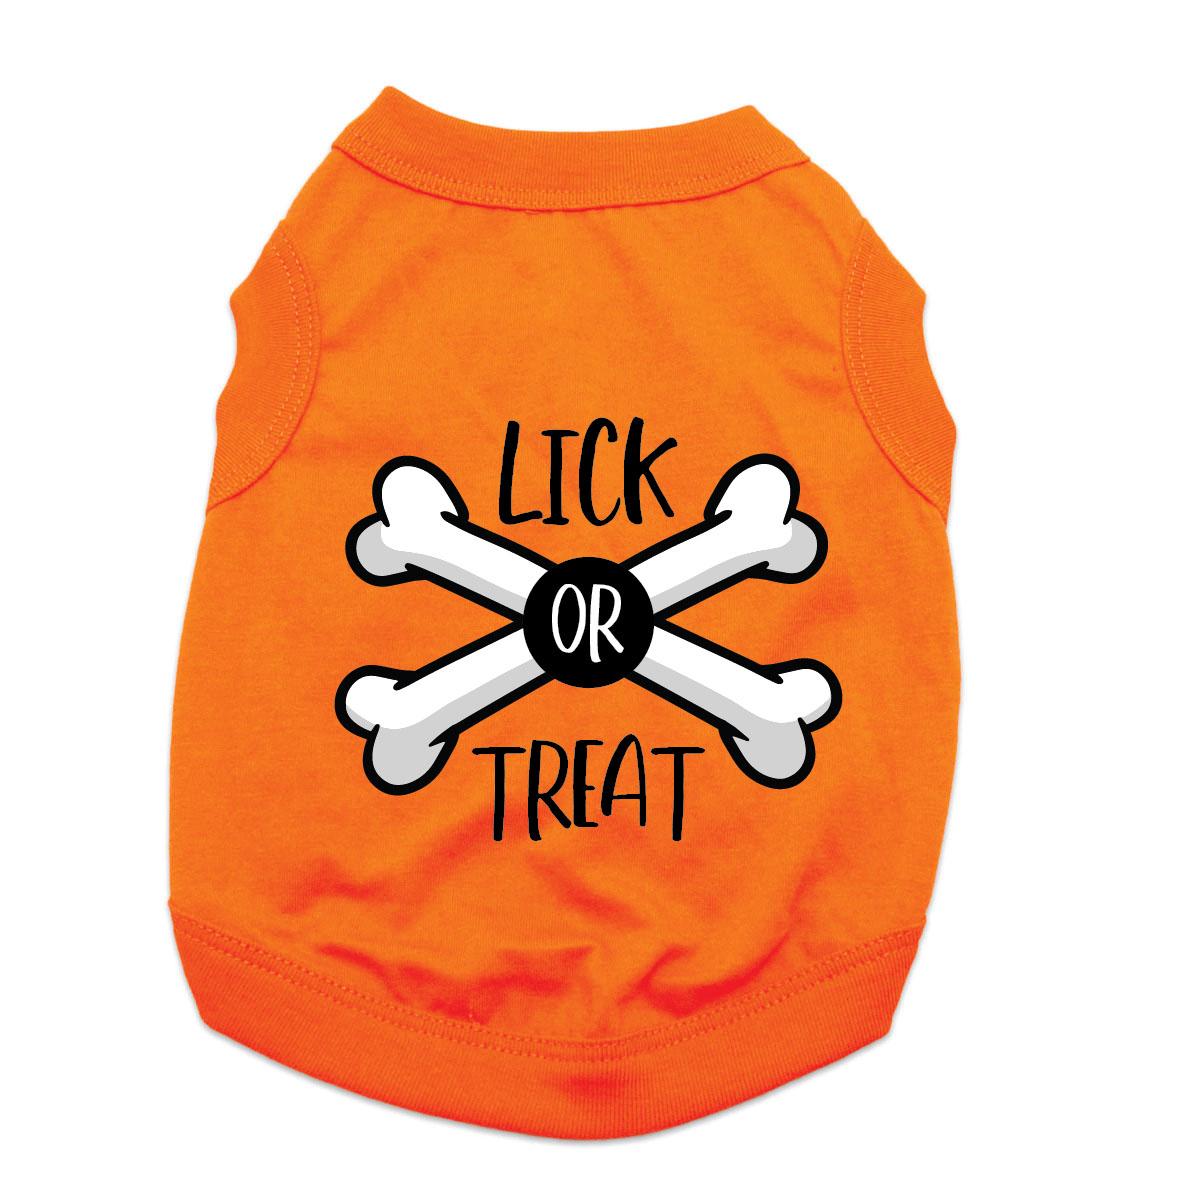 Lick or Treat Halloween Dog Shirt - Orange